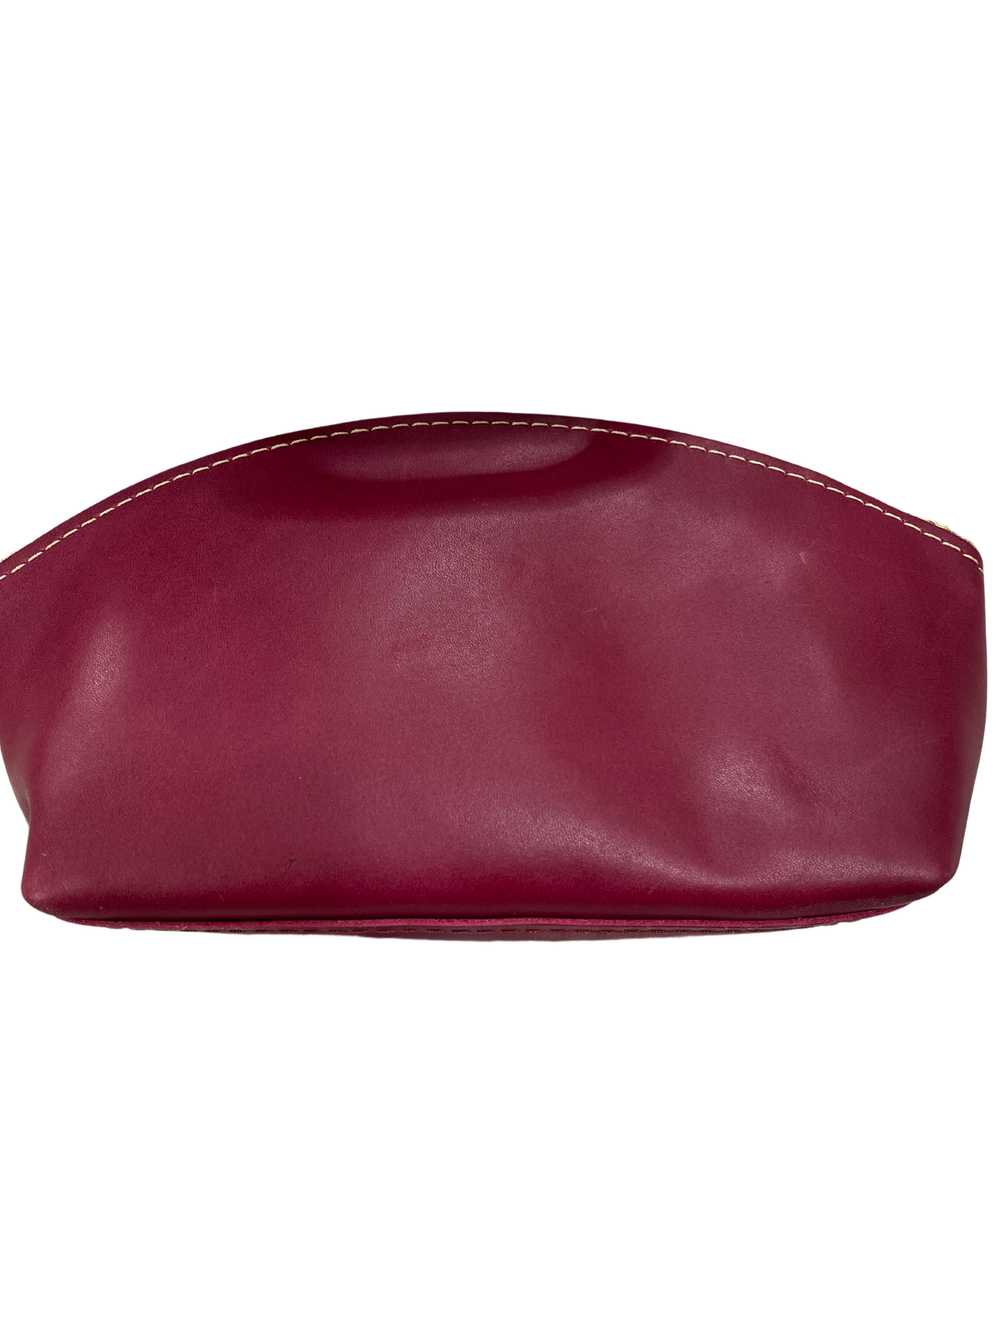 Portland Leather Eclipse Makeup Bag - image 4